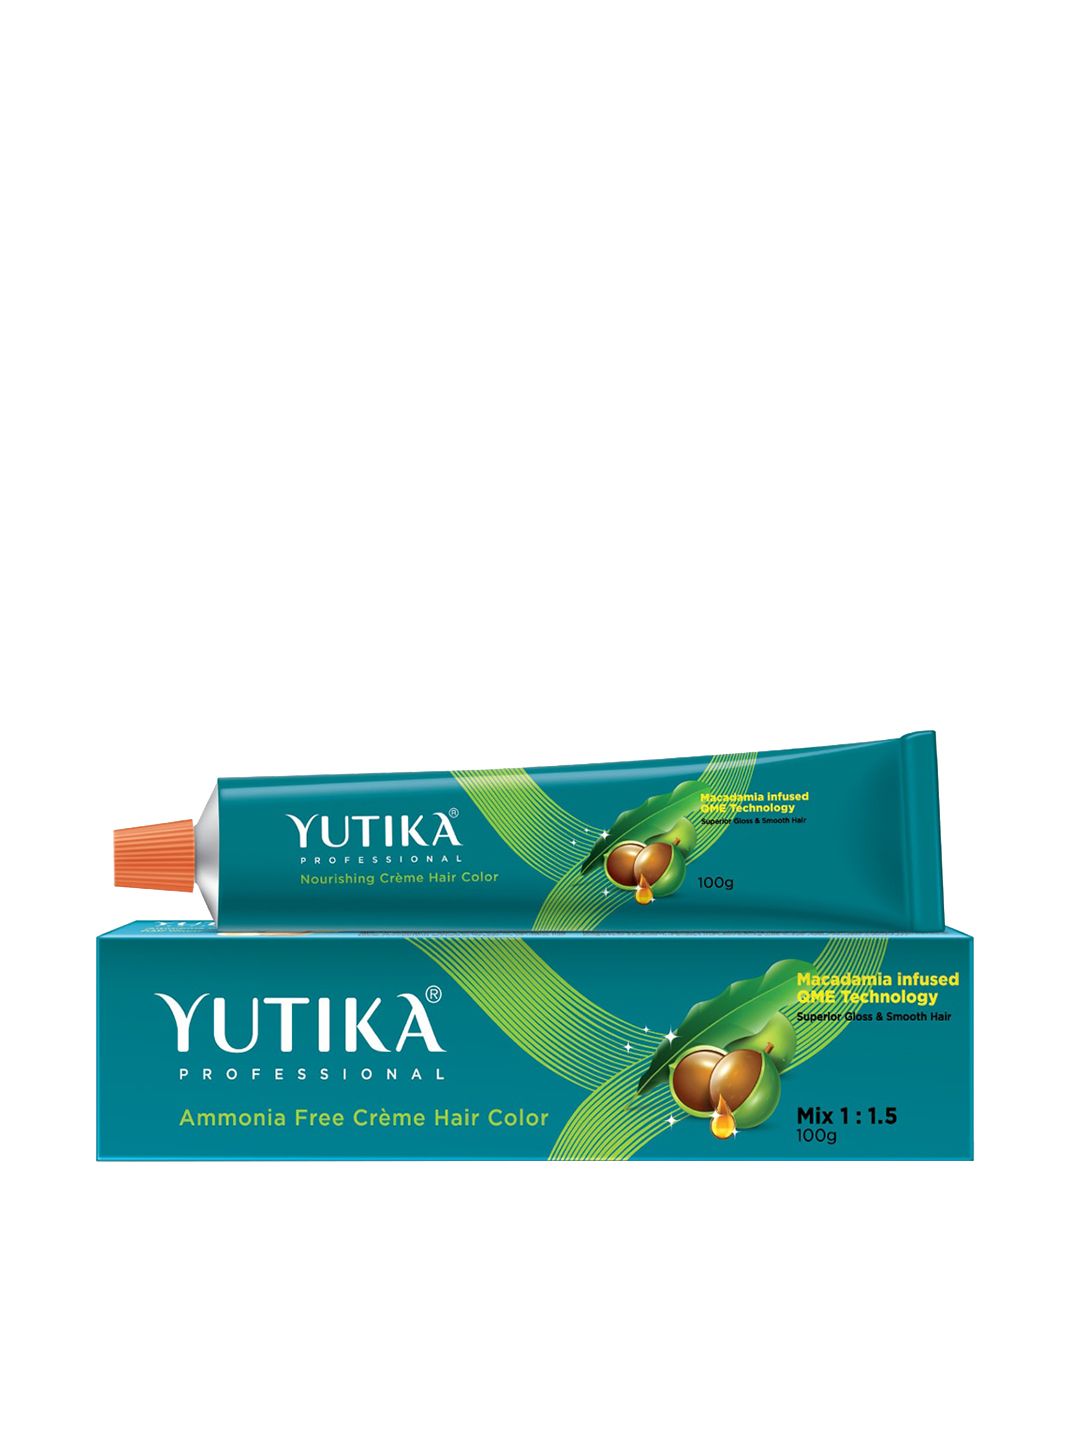 YUTIKA Professional Creme Hair Color 100gm Price in India